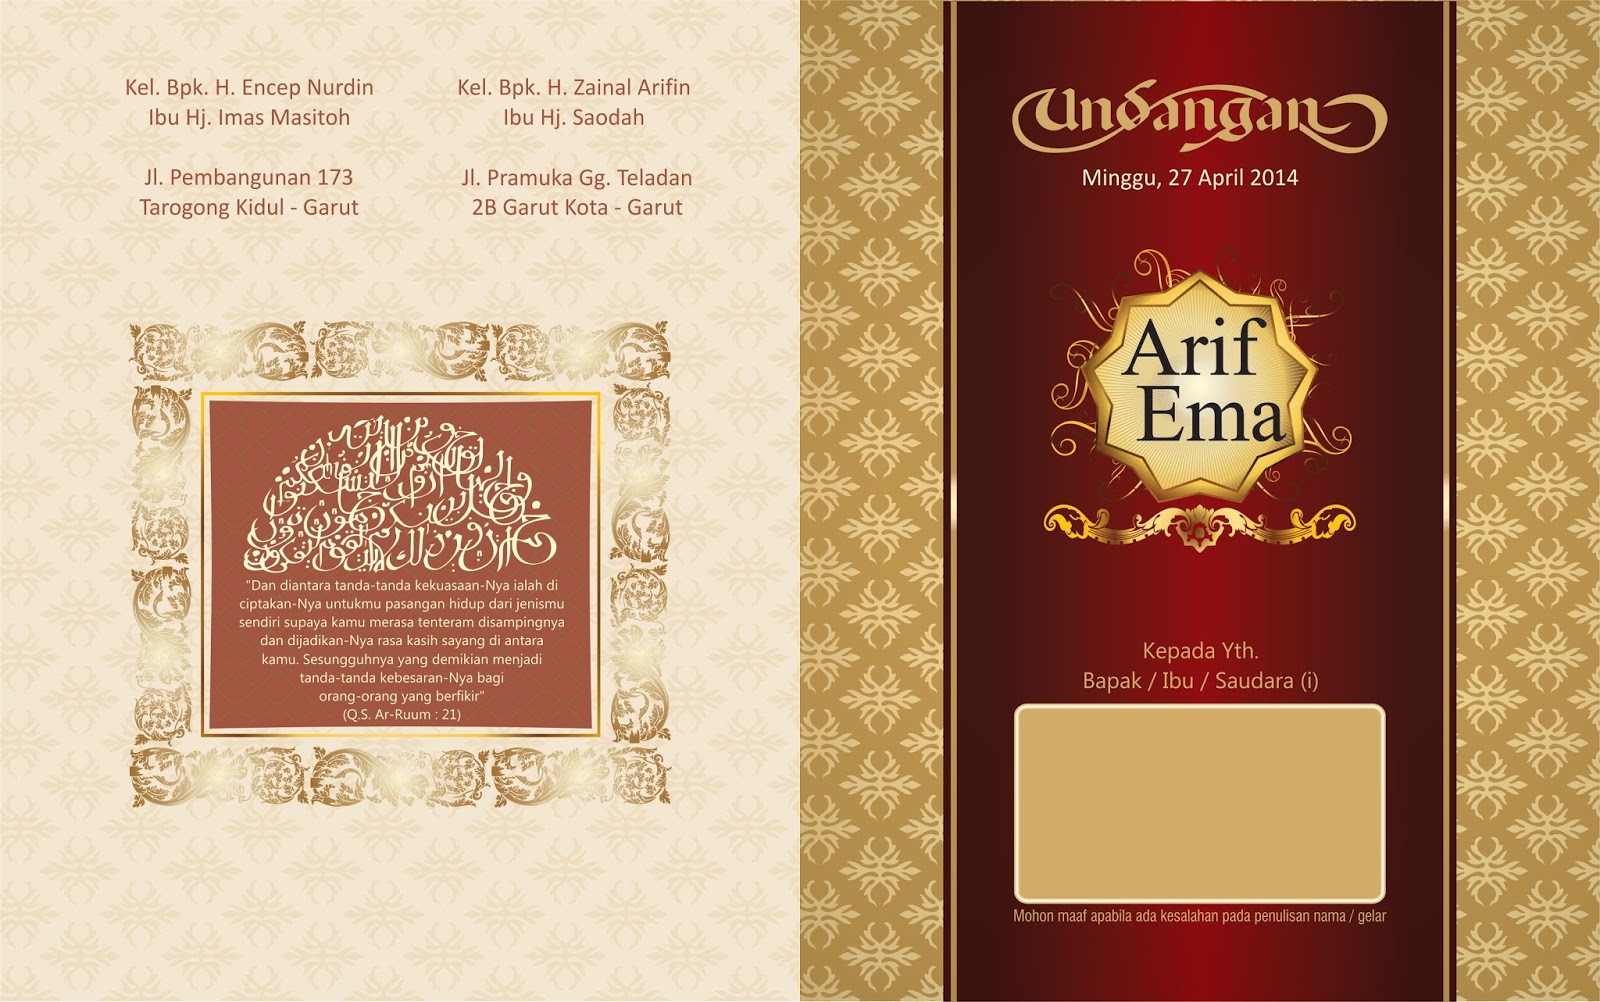 Download Contoh Undangan Pernikahan Cdri Copaxurban